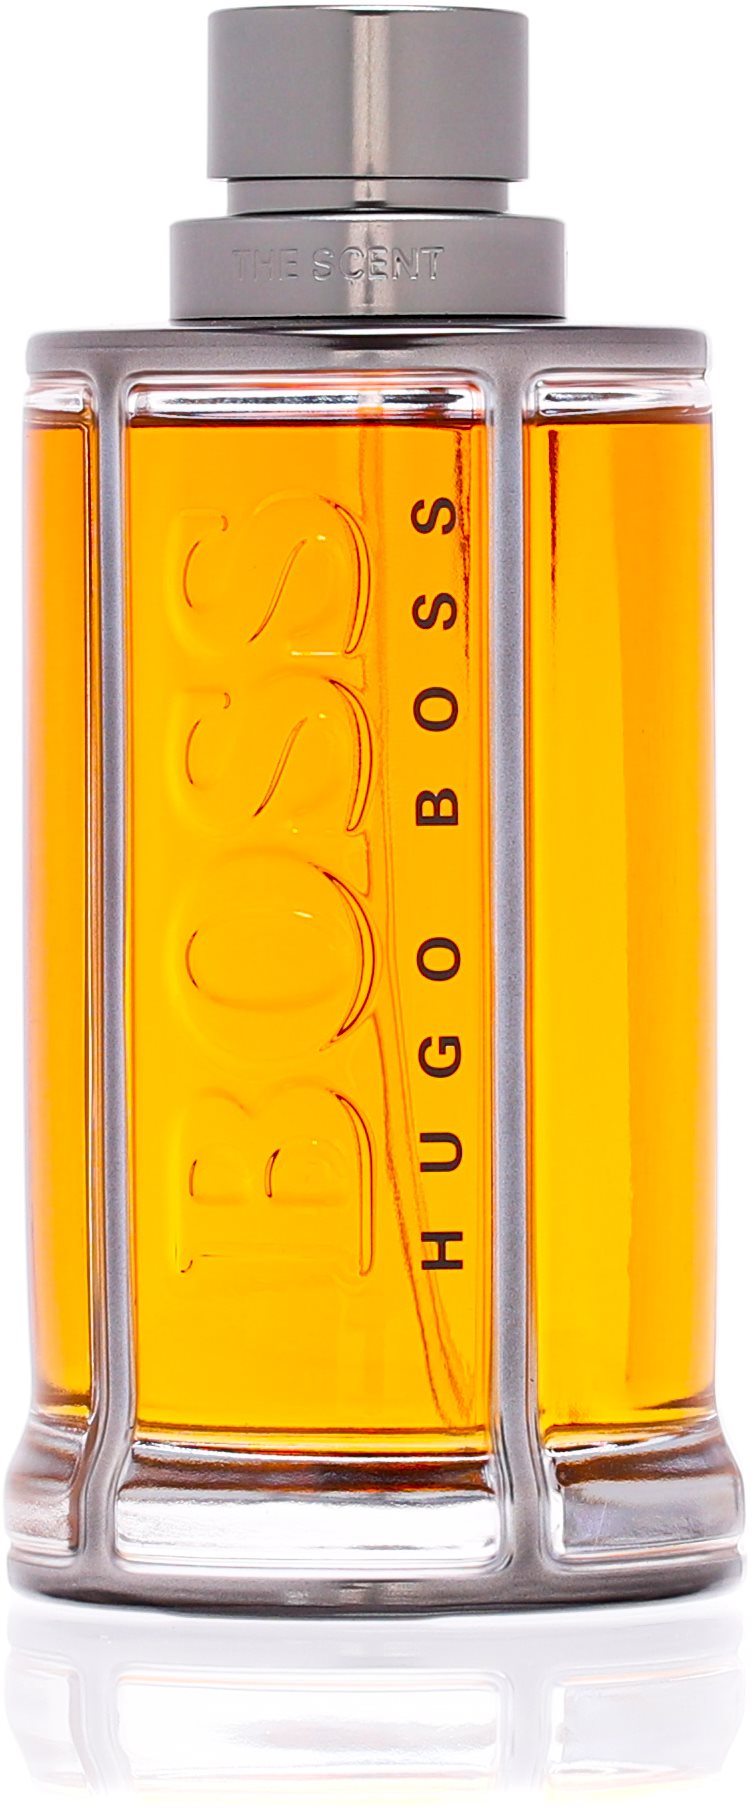 Hugo Boss BOSS The Scent Eau de Toilette uraknak 200 ml